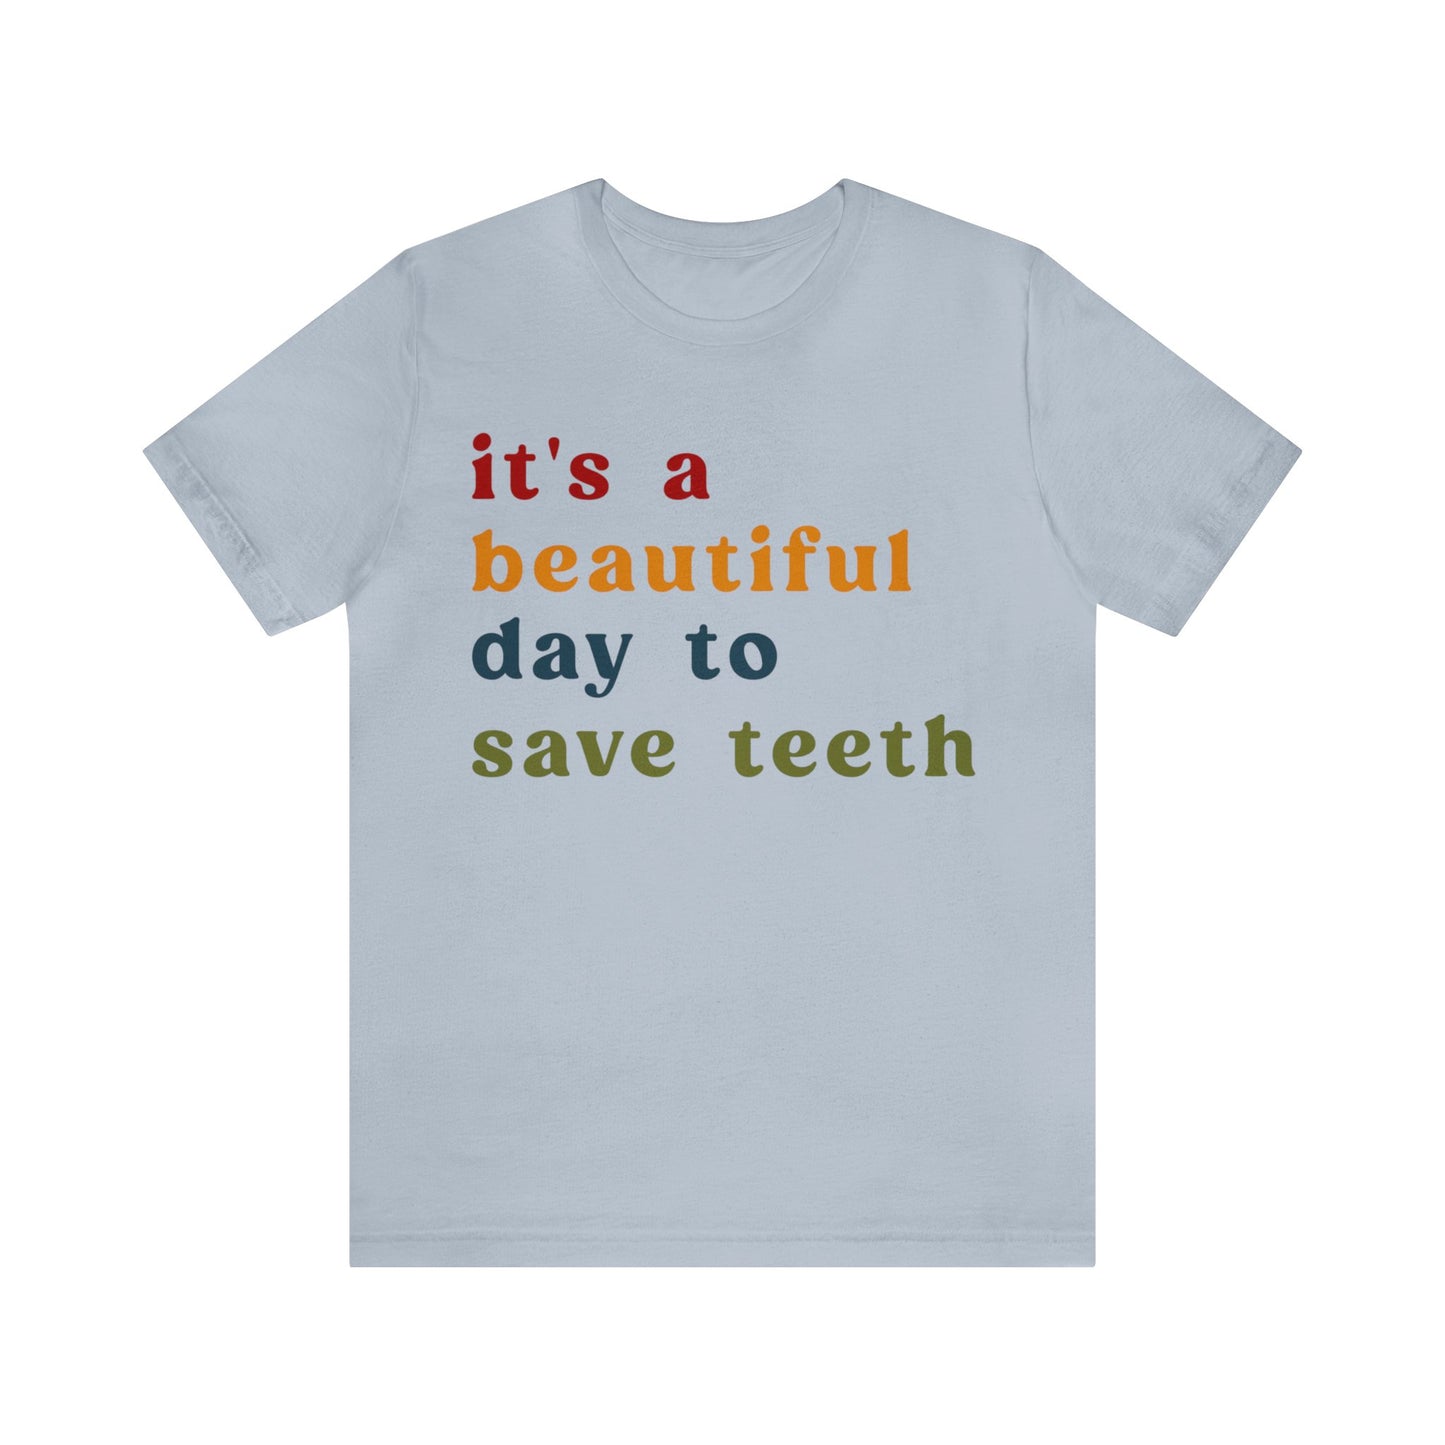 It's A Beautiful Day To Save Teeth Shirt, Dental Student Shirt, Orthodontist Shirt, Dentistry Shirt, Doctor of Dental Surgery Shirt, T1259